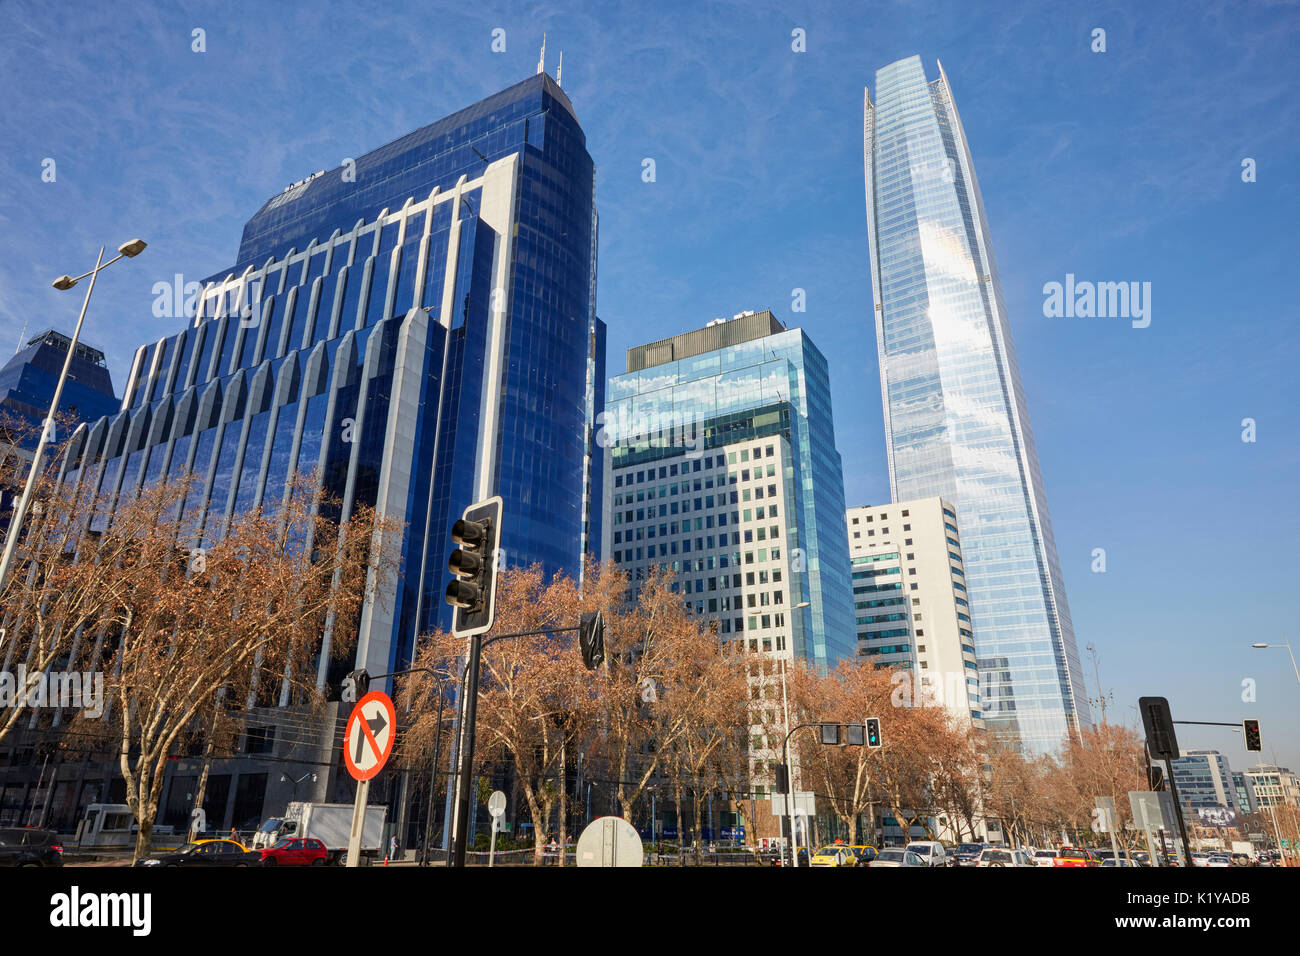 Gran Torre Costanera Tower, La costanera, La Costanera Center, Santiago, Chili Banque D'Images